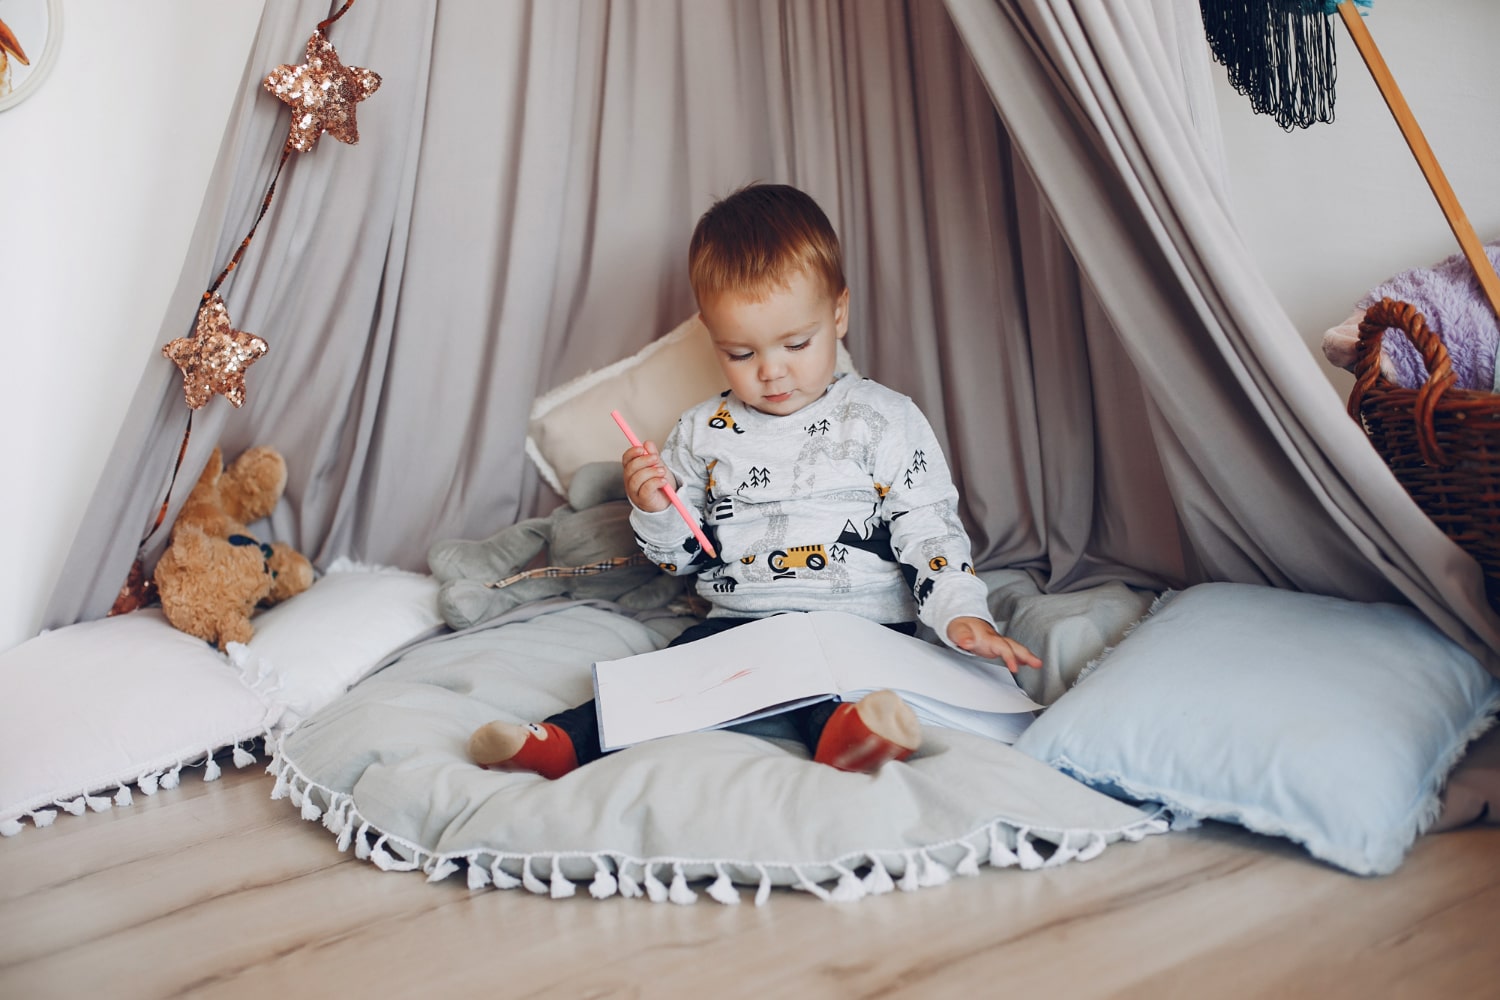 Bookworm-themed newborn baby photoshoot